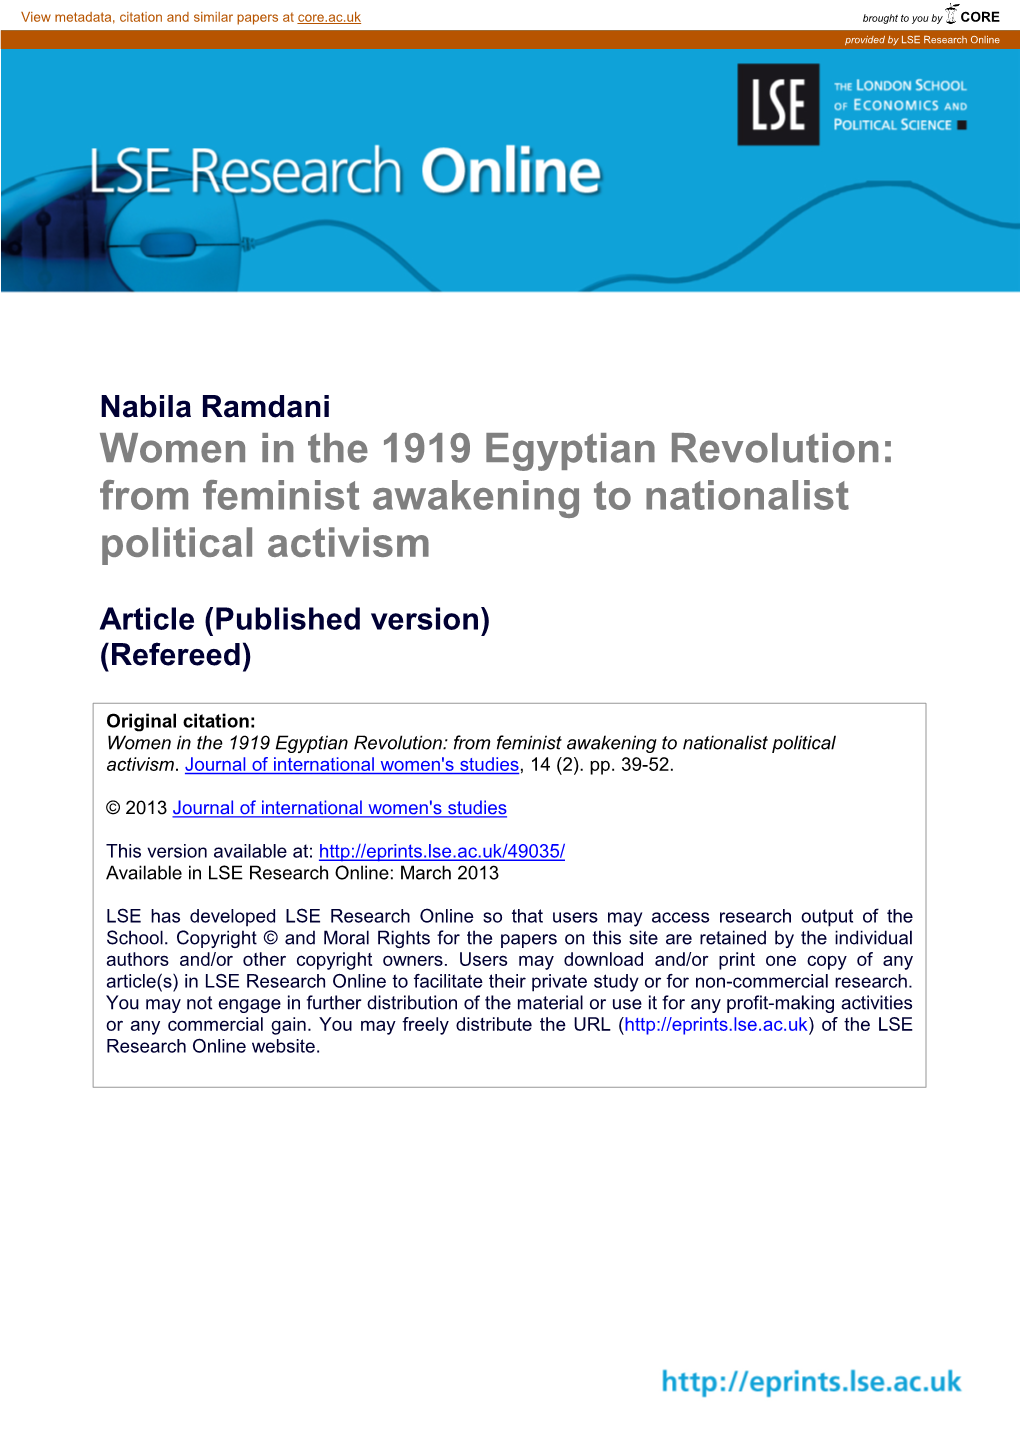 Women in the 1919 Egyptian Revolution: from Feminist Awakening to Nationalist Political Activism